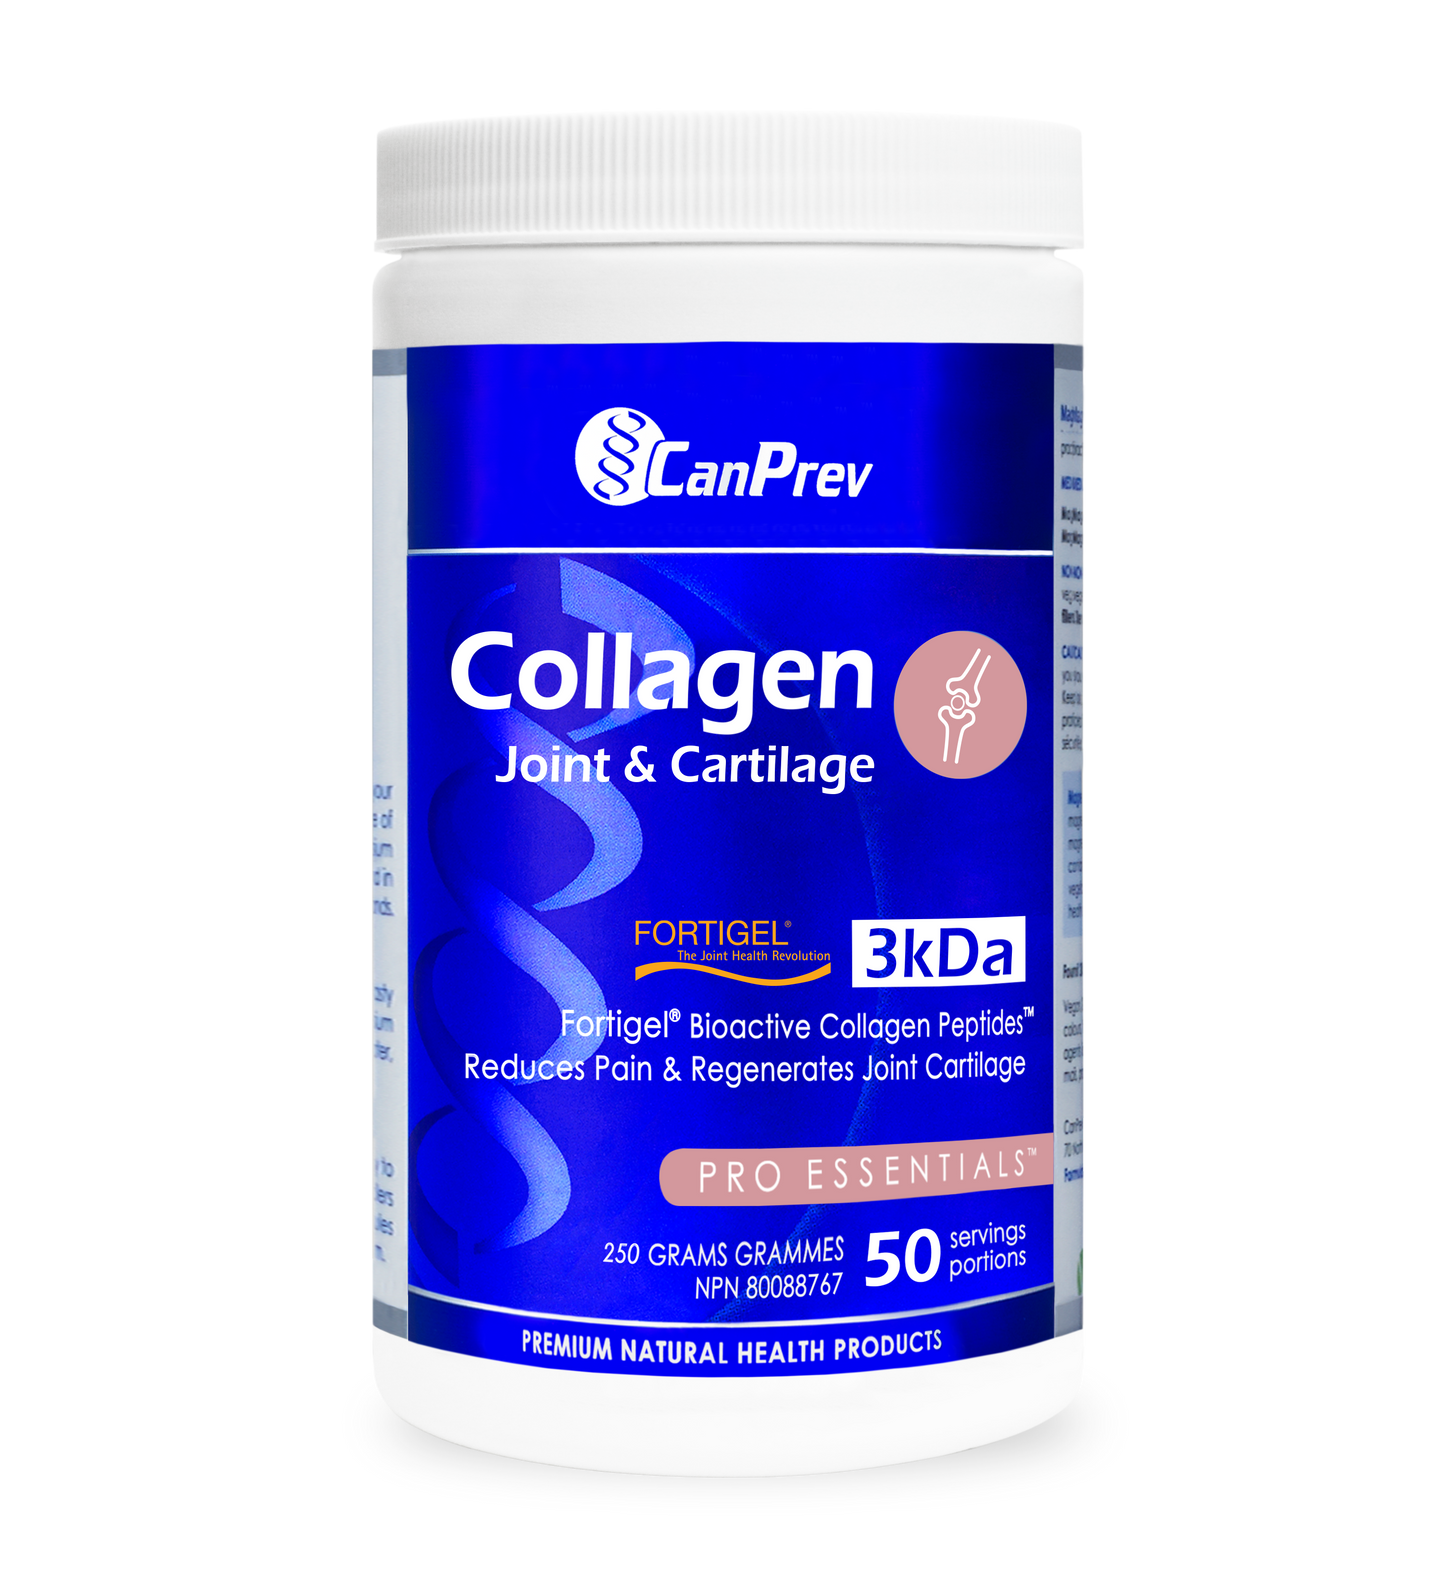 CanPrev Collagen Joint & Cartilage